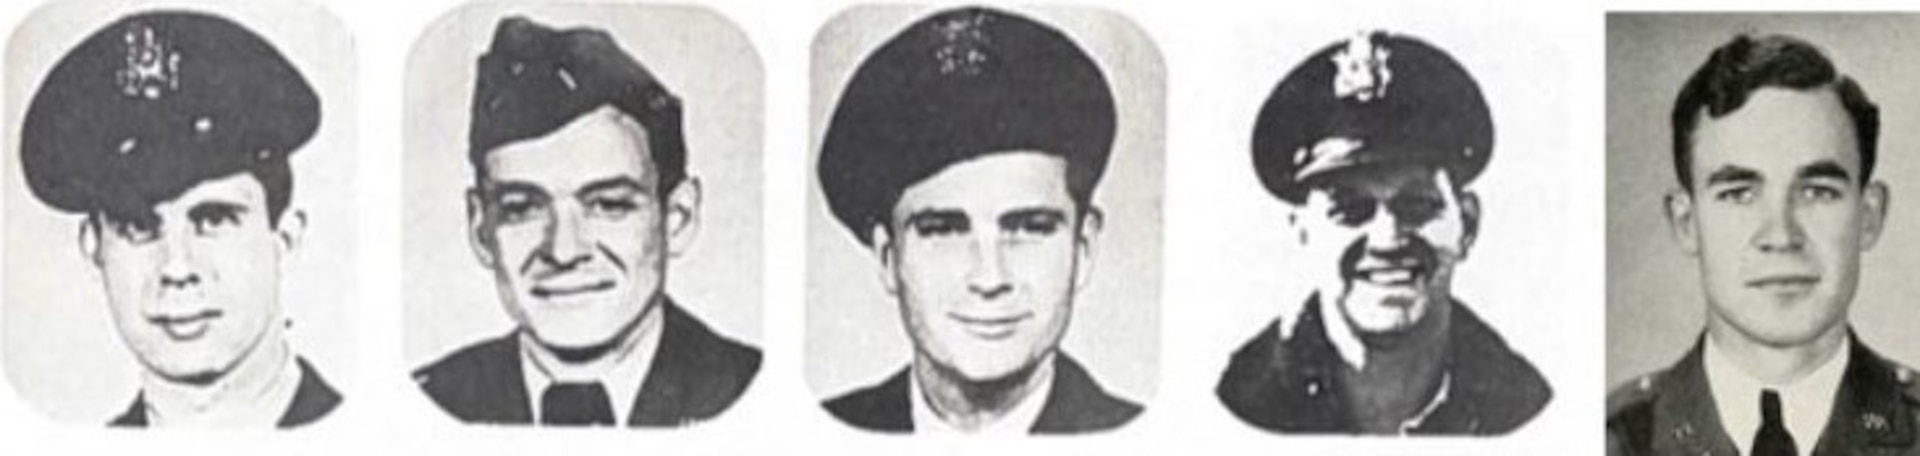 Georgia Air National Guard pilots killed in action in Korea, from left: Capt. Barney Casteel, Lt. James Collins, Capt. David Mather, Capt. John Thompson, Lt. William White.